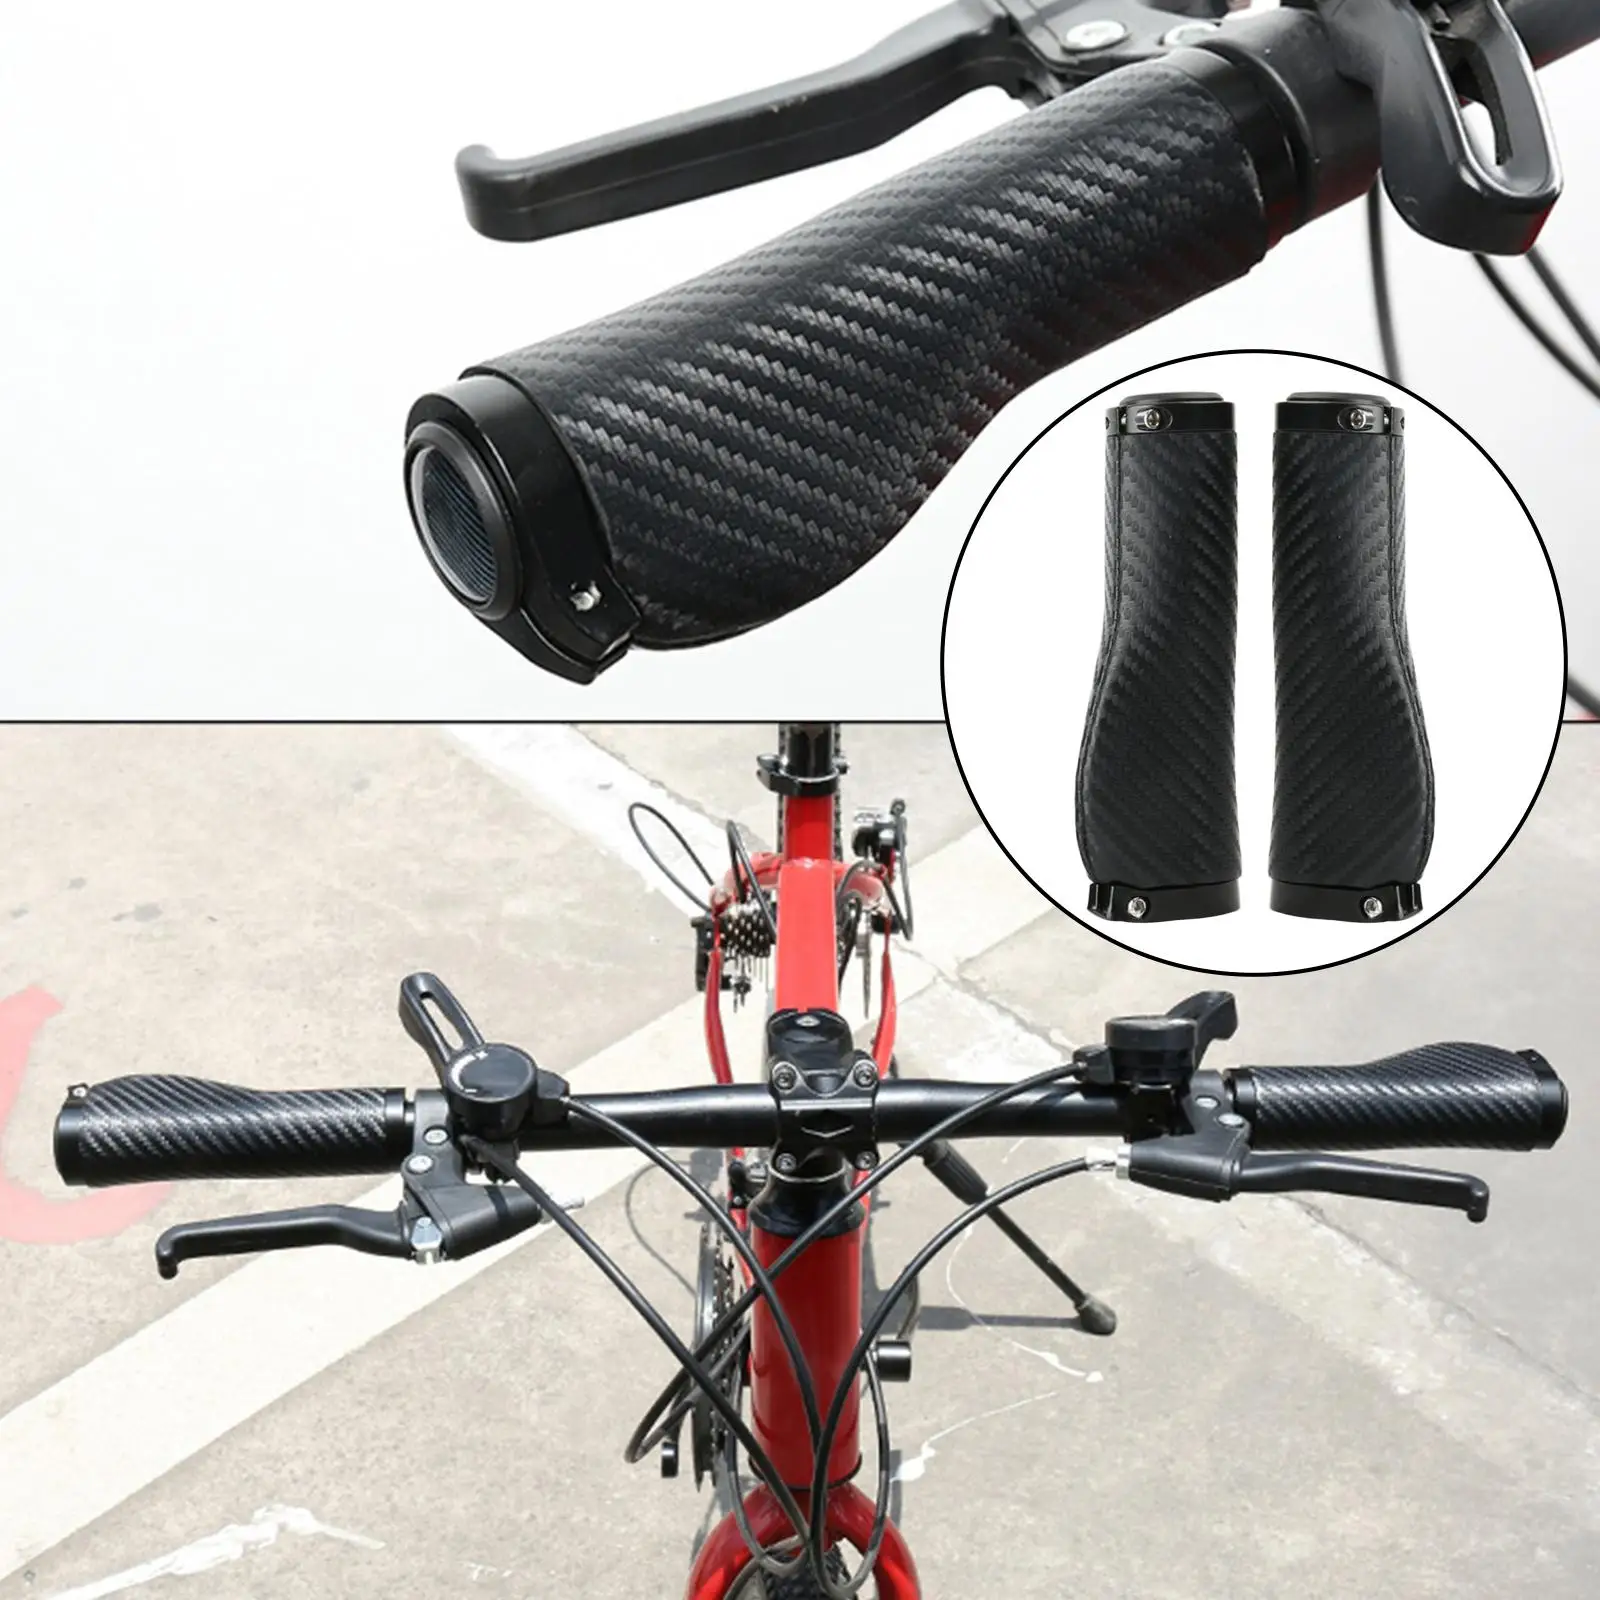 2Pcs Universal Mountain Bike Handlebar Grips Non Slip Carbon Fiber Style Ergonomic Bar Grips for Road Bike Mountain Bikes E Bike